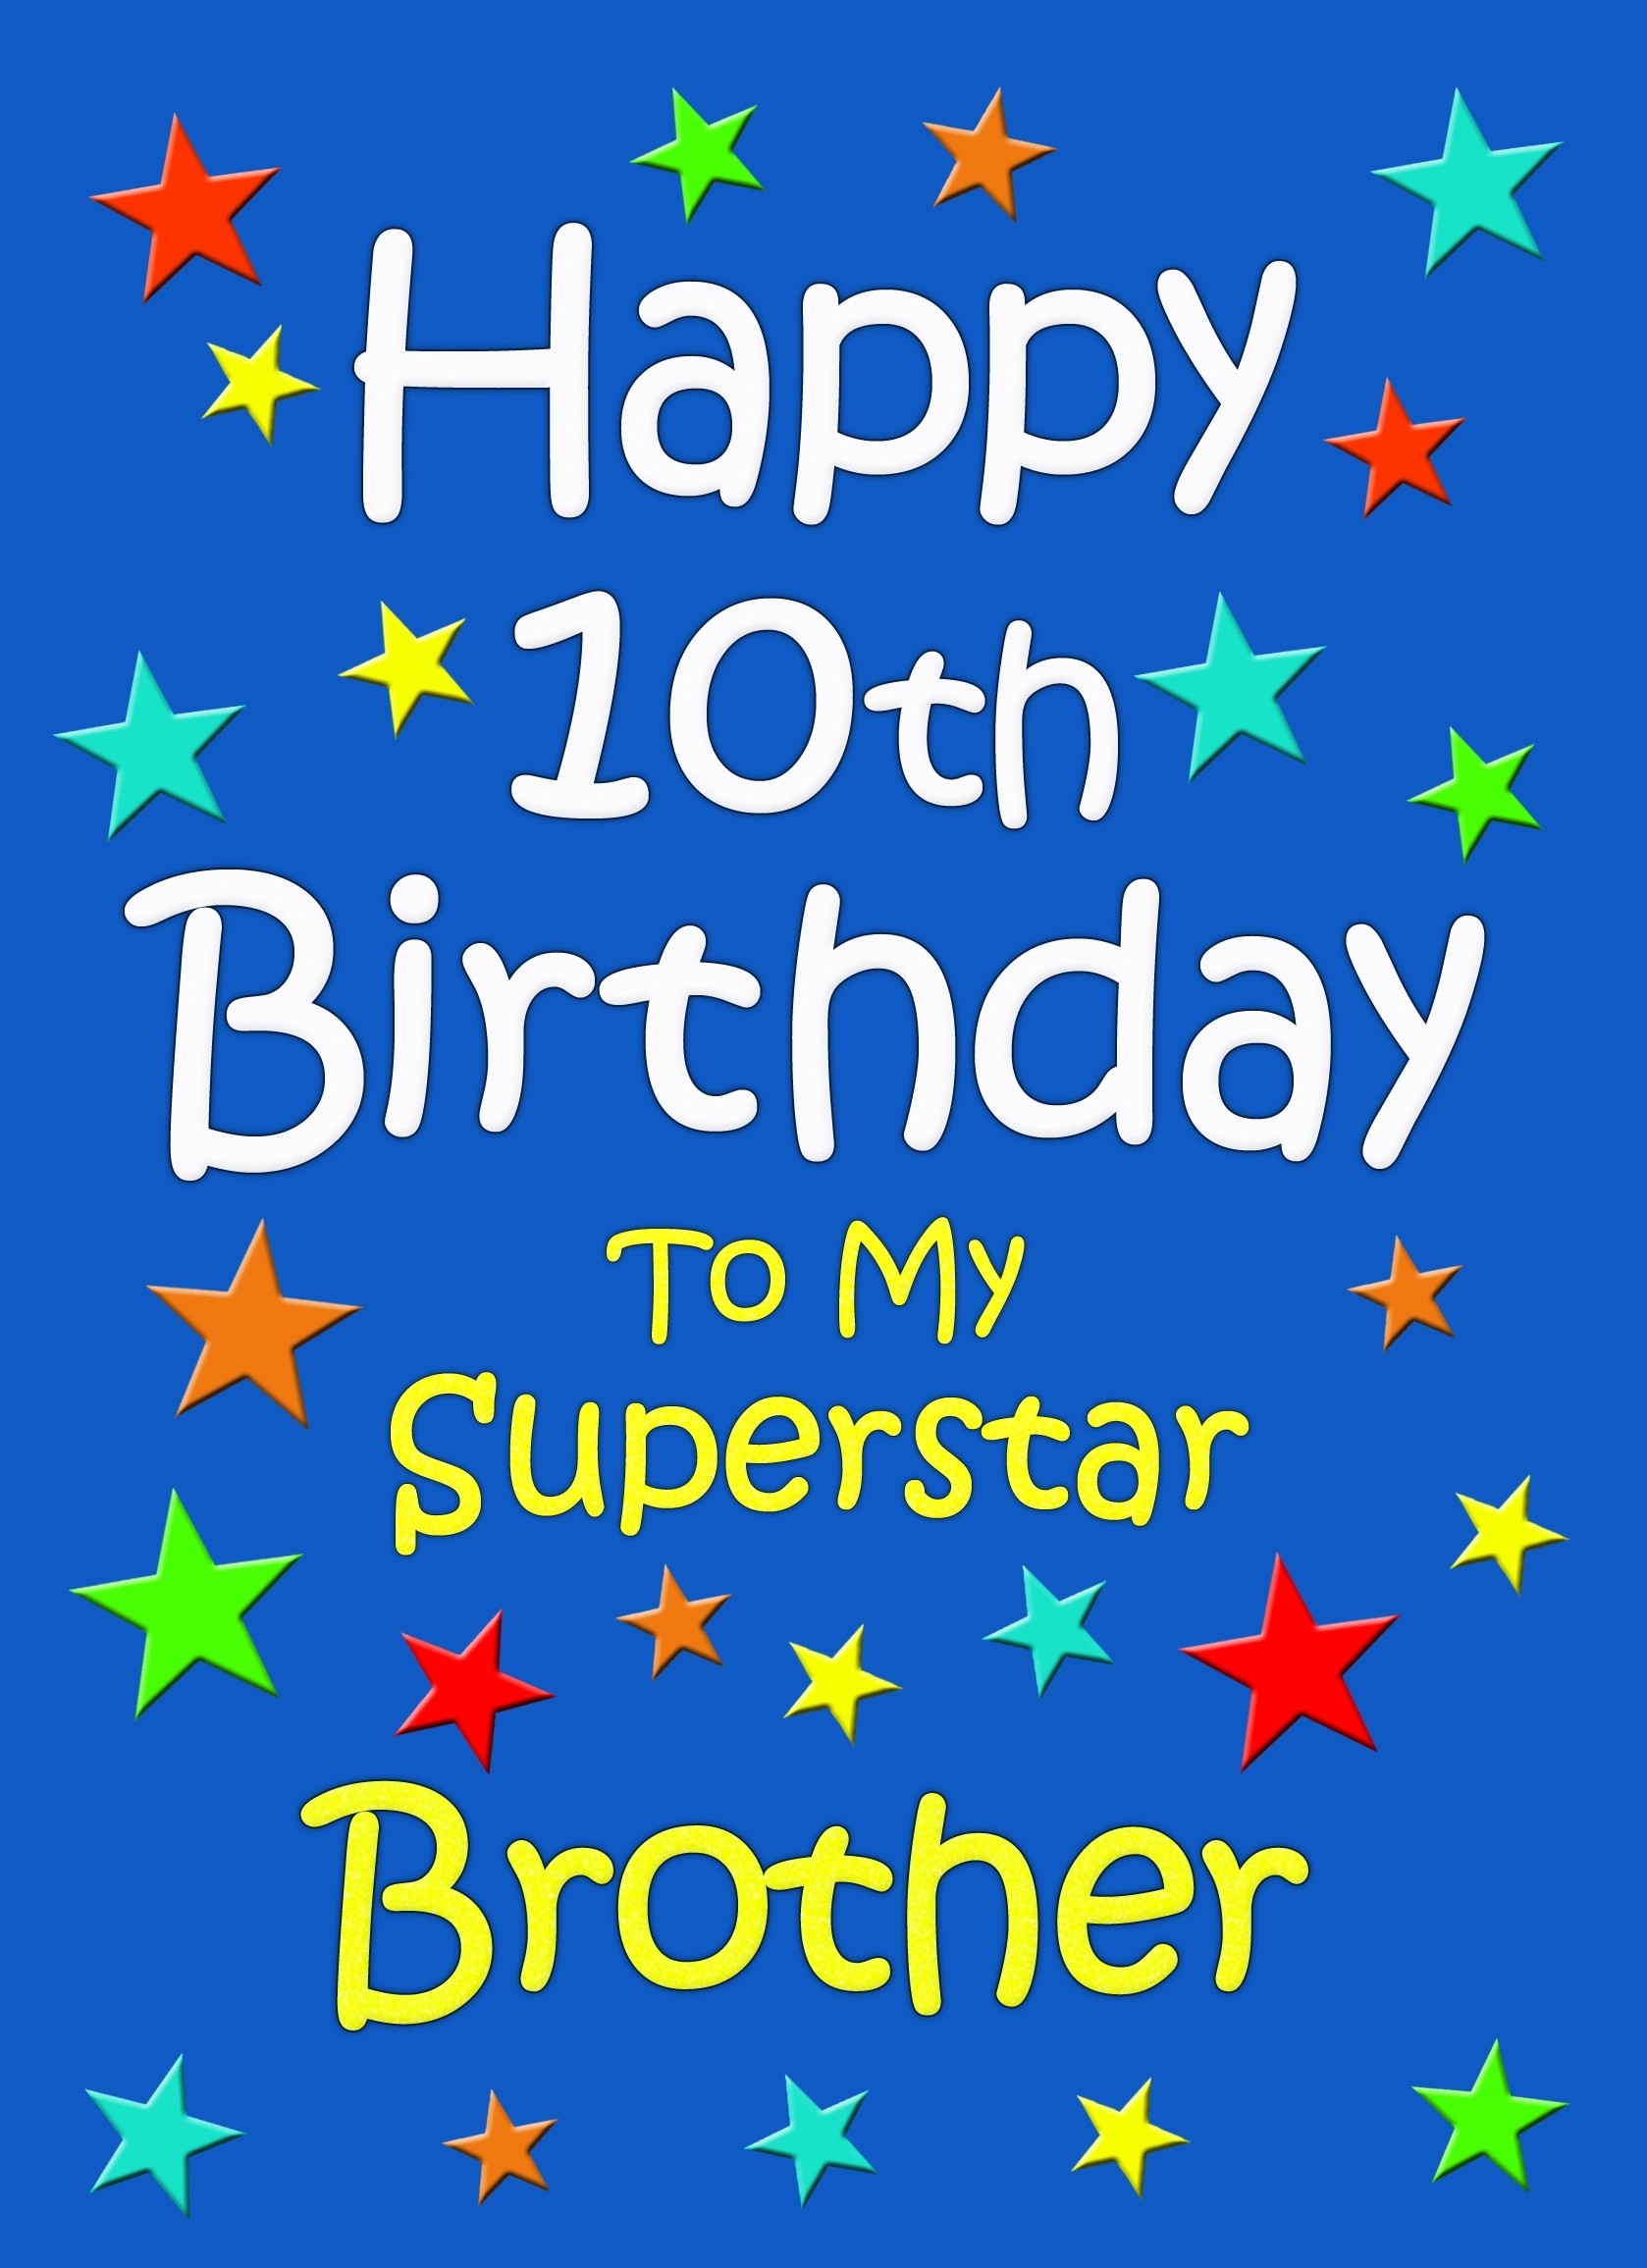 Brother 10th Birthday Card (Blue)